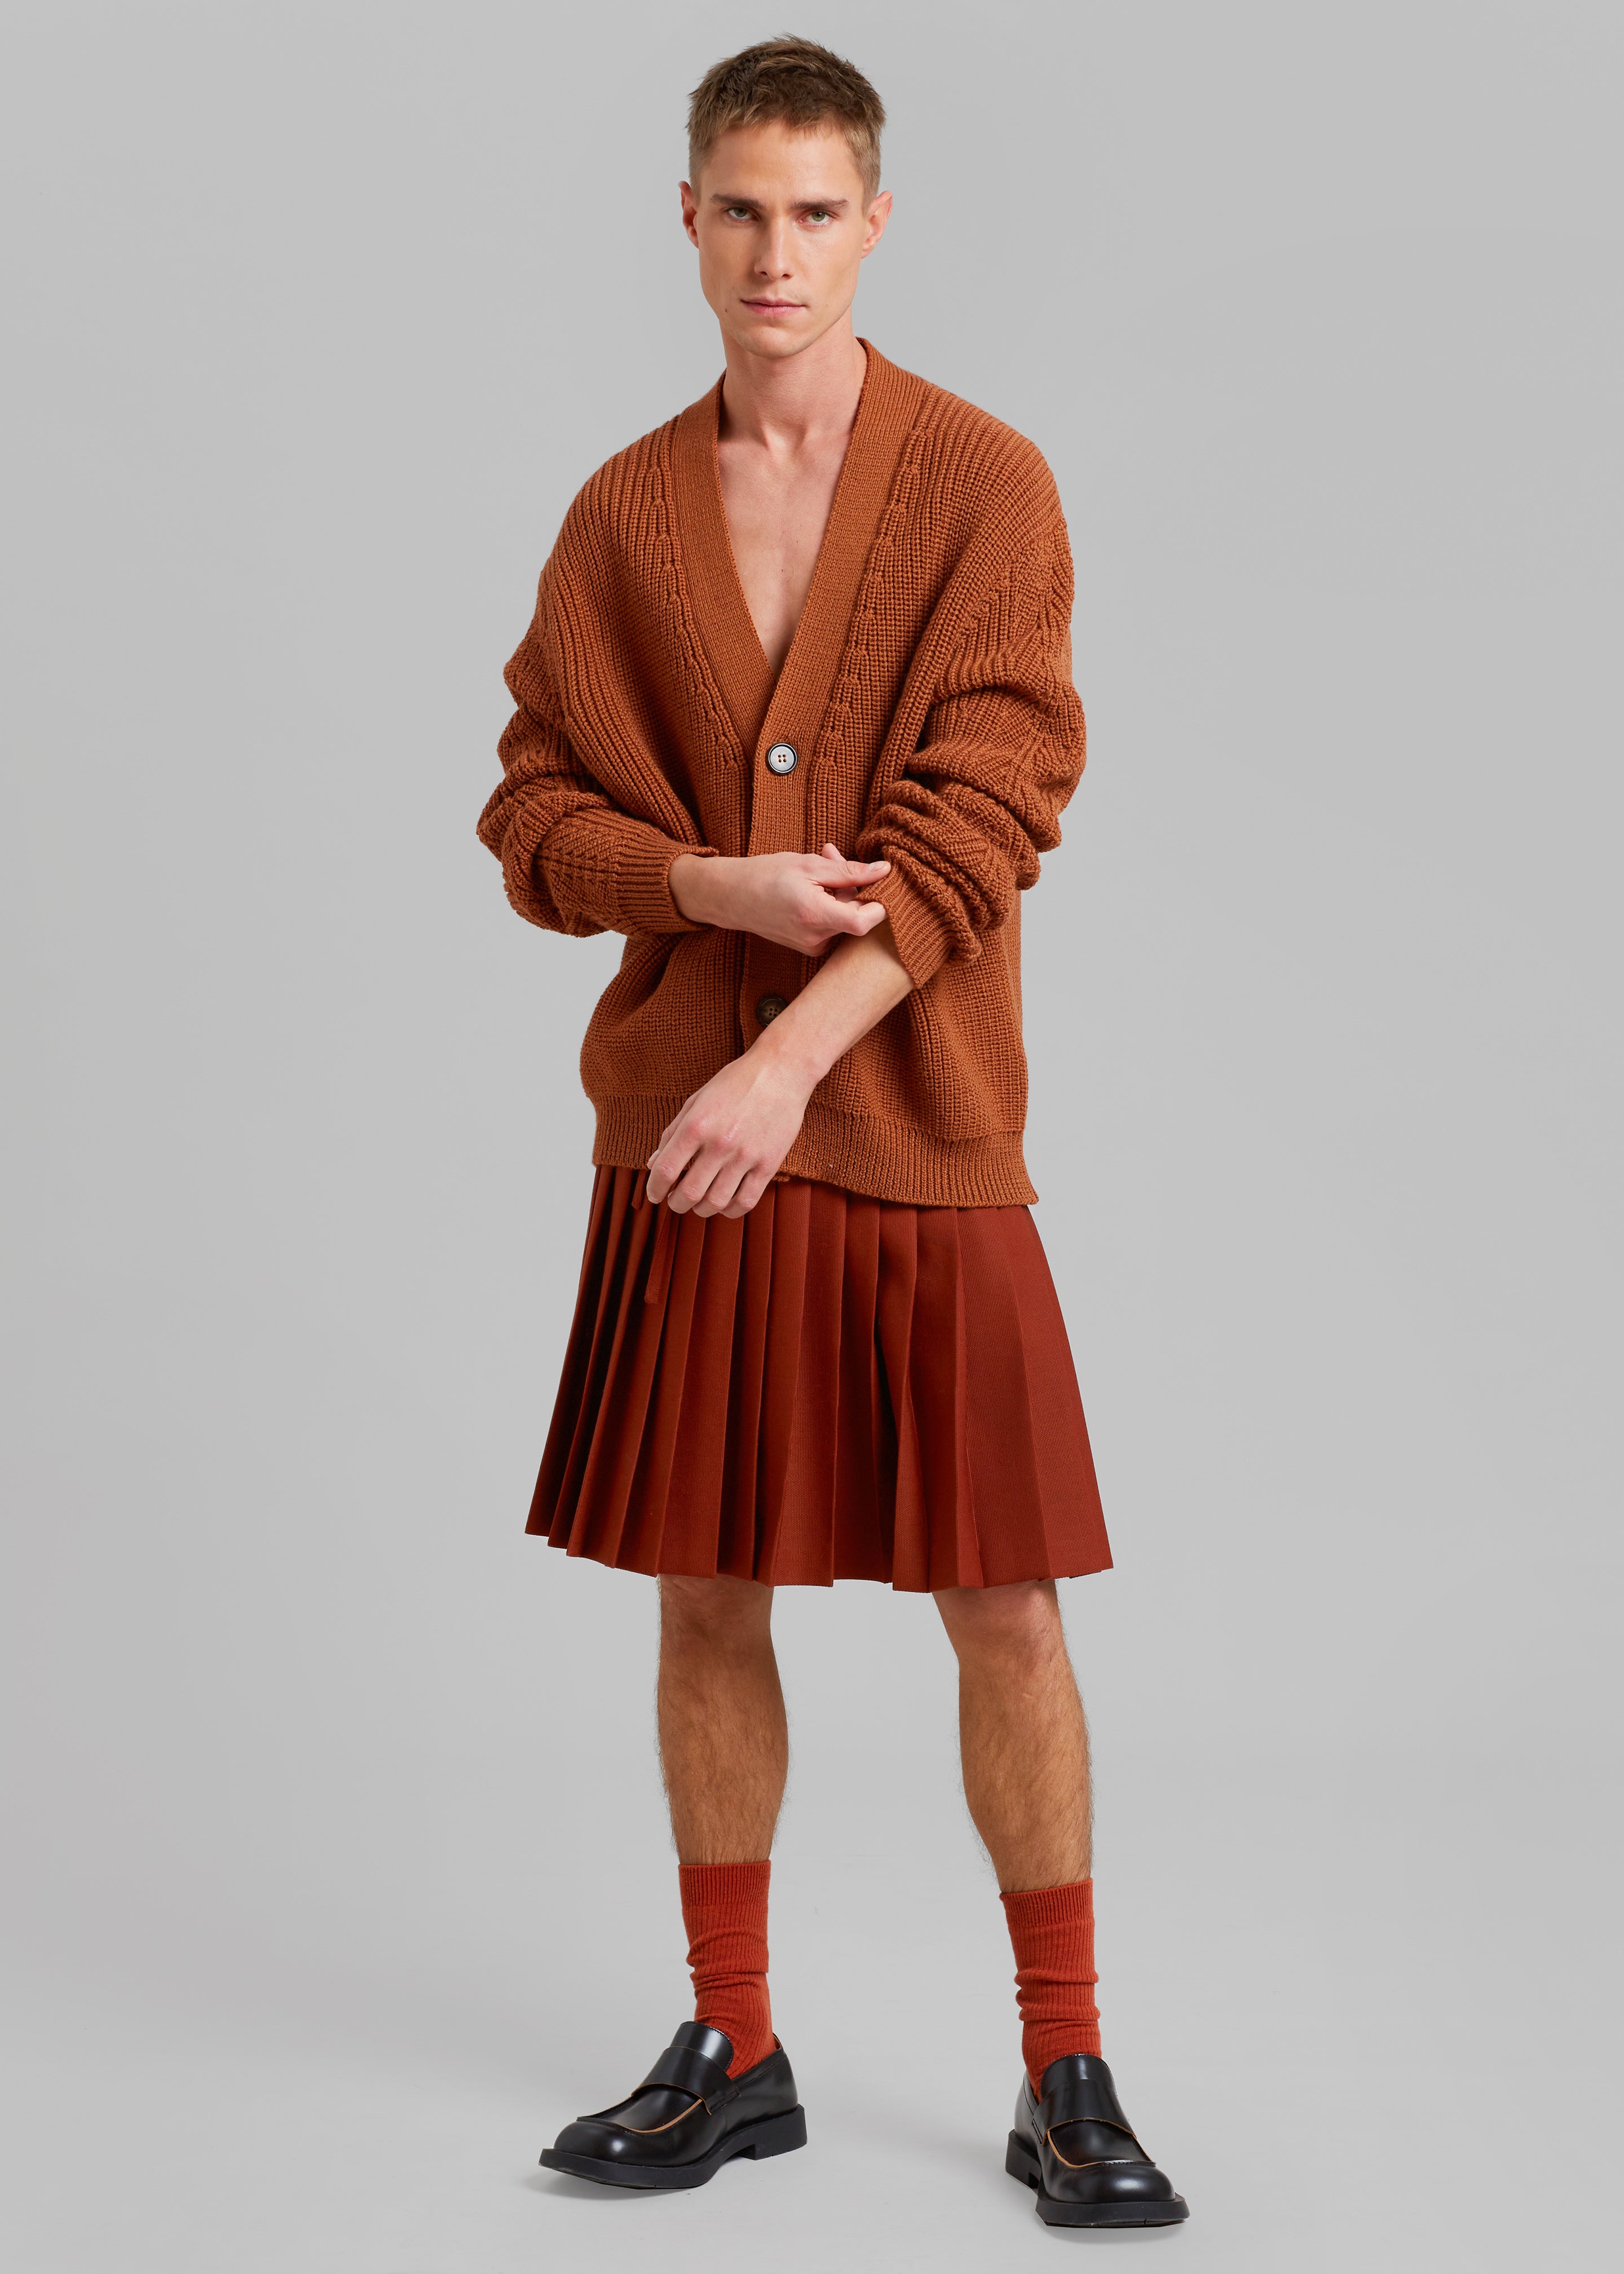 EGONLab Euphoria Skirt - Rust Wool - 3